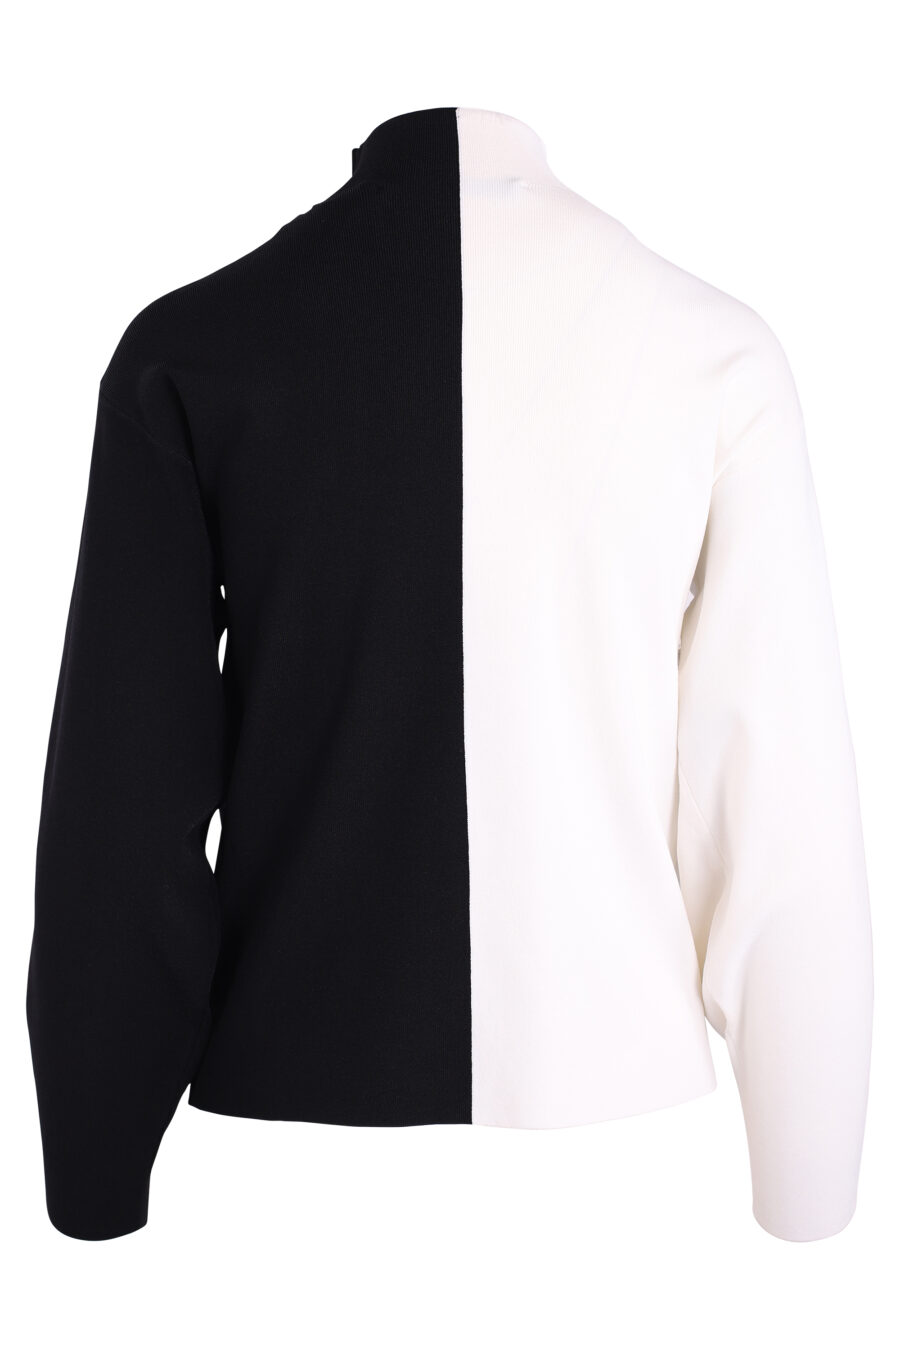 Camisola bicolor preta e branca com maxilogue - IMG 3380